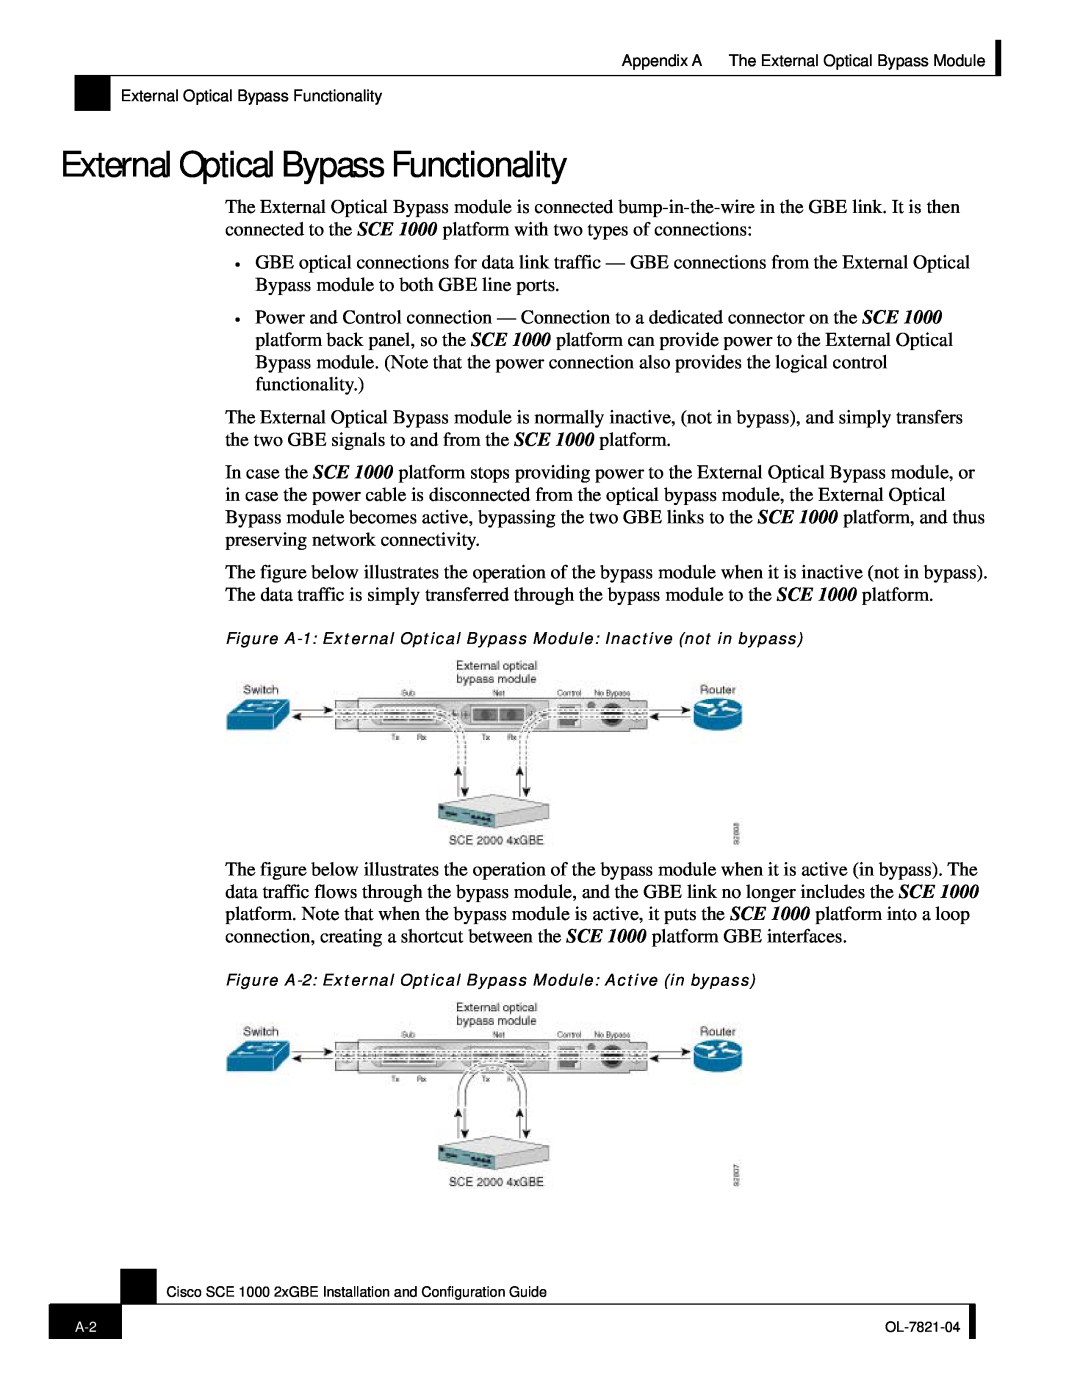 Cisco Systems OL-7821-04 External Optical Bypass Functionality, Figure A-2 External Optical Bypass Module Active in bypass 